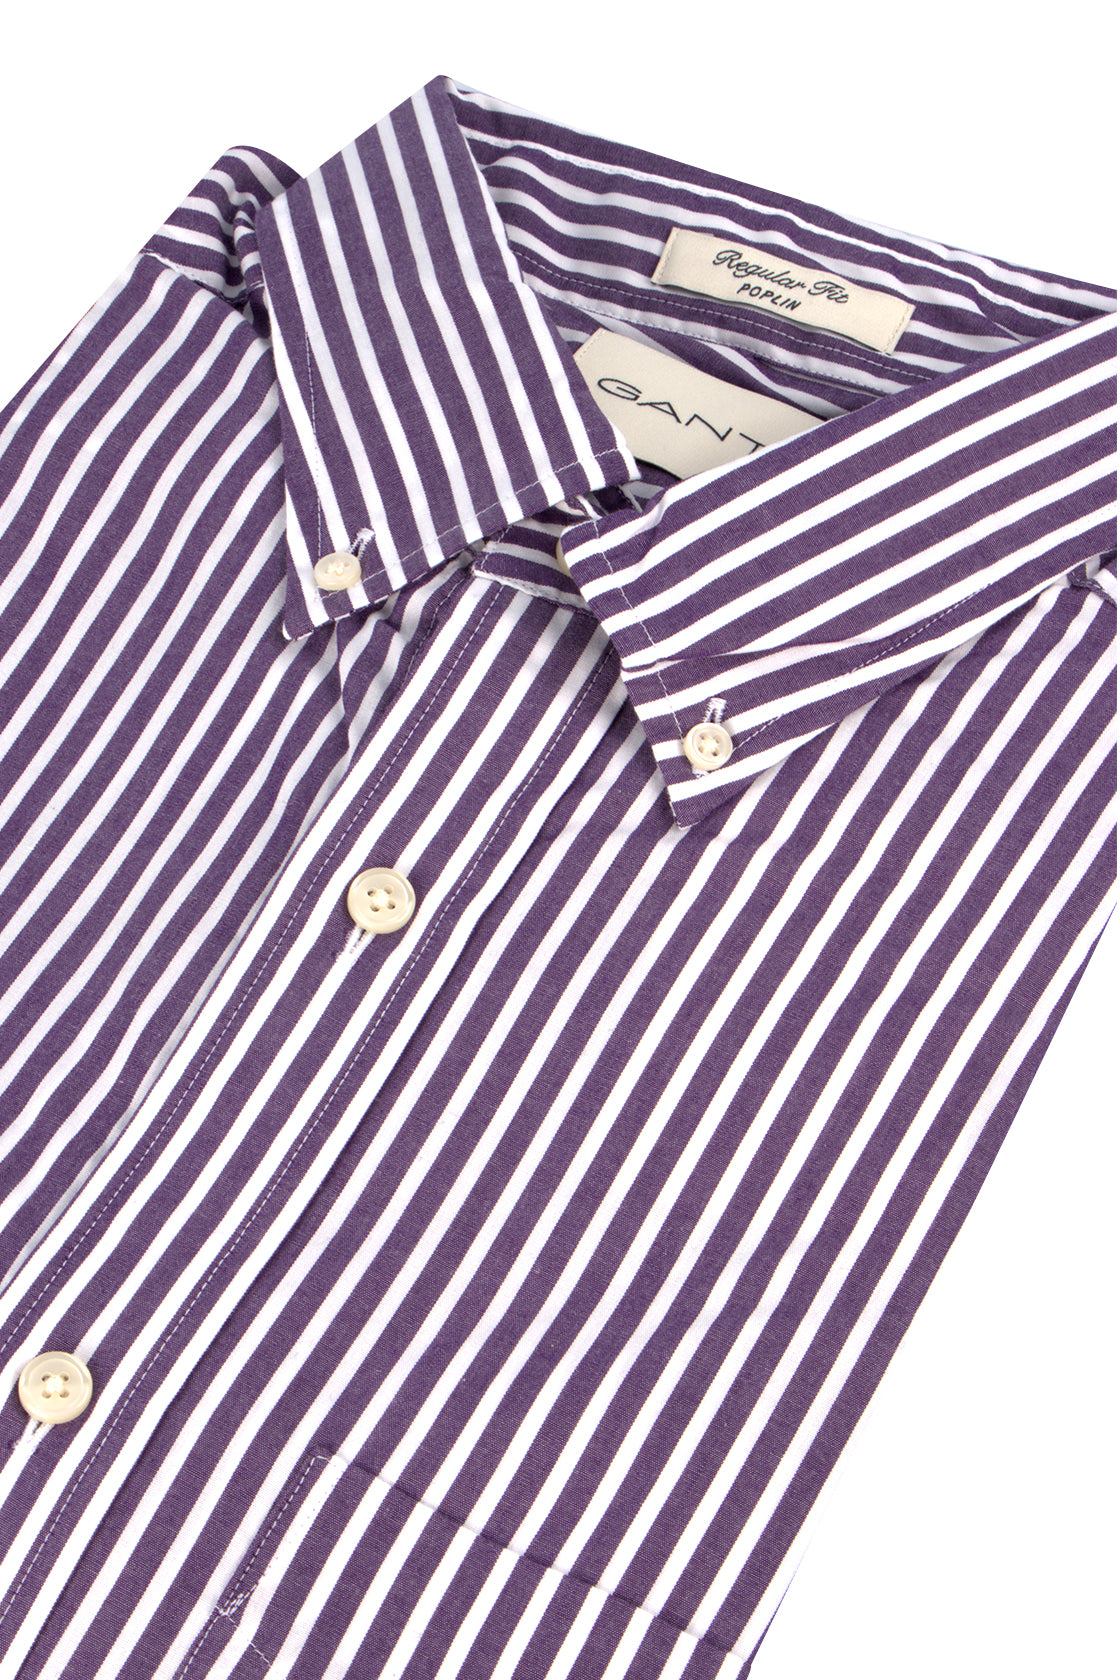 Gant Poplin Stripe LS Shirt Pansy Purple